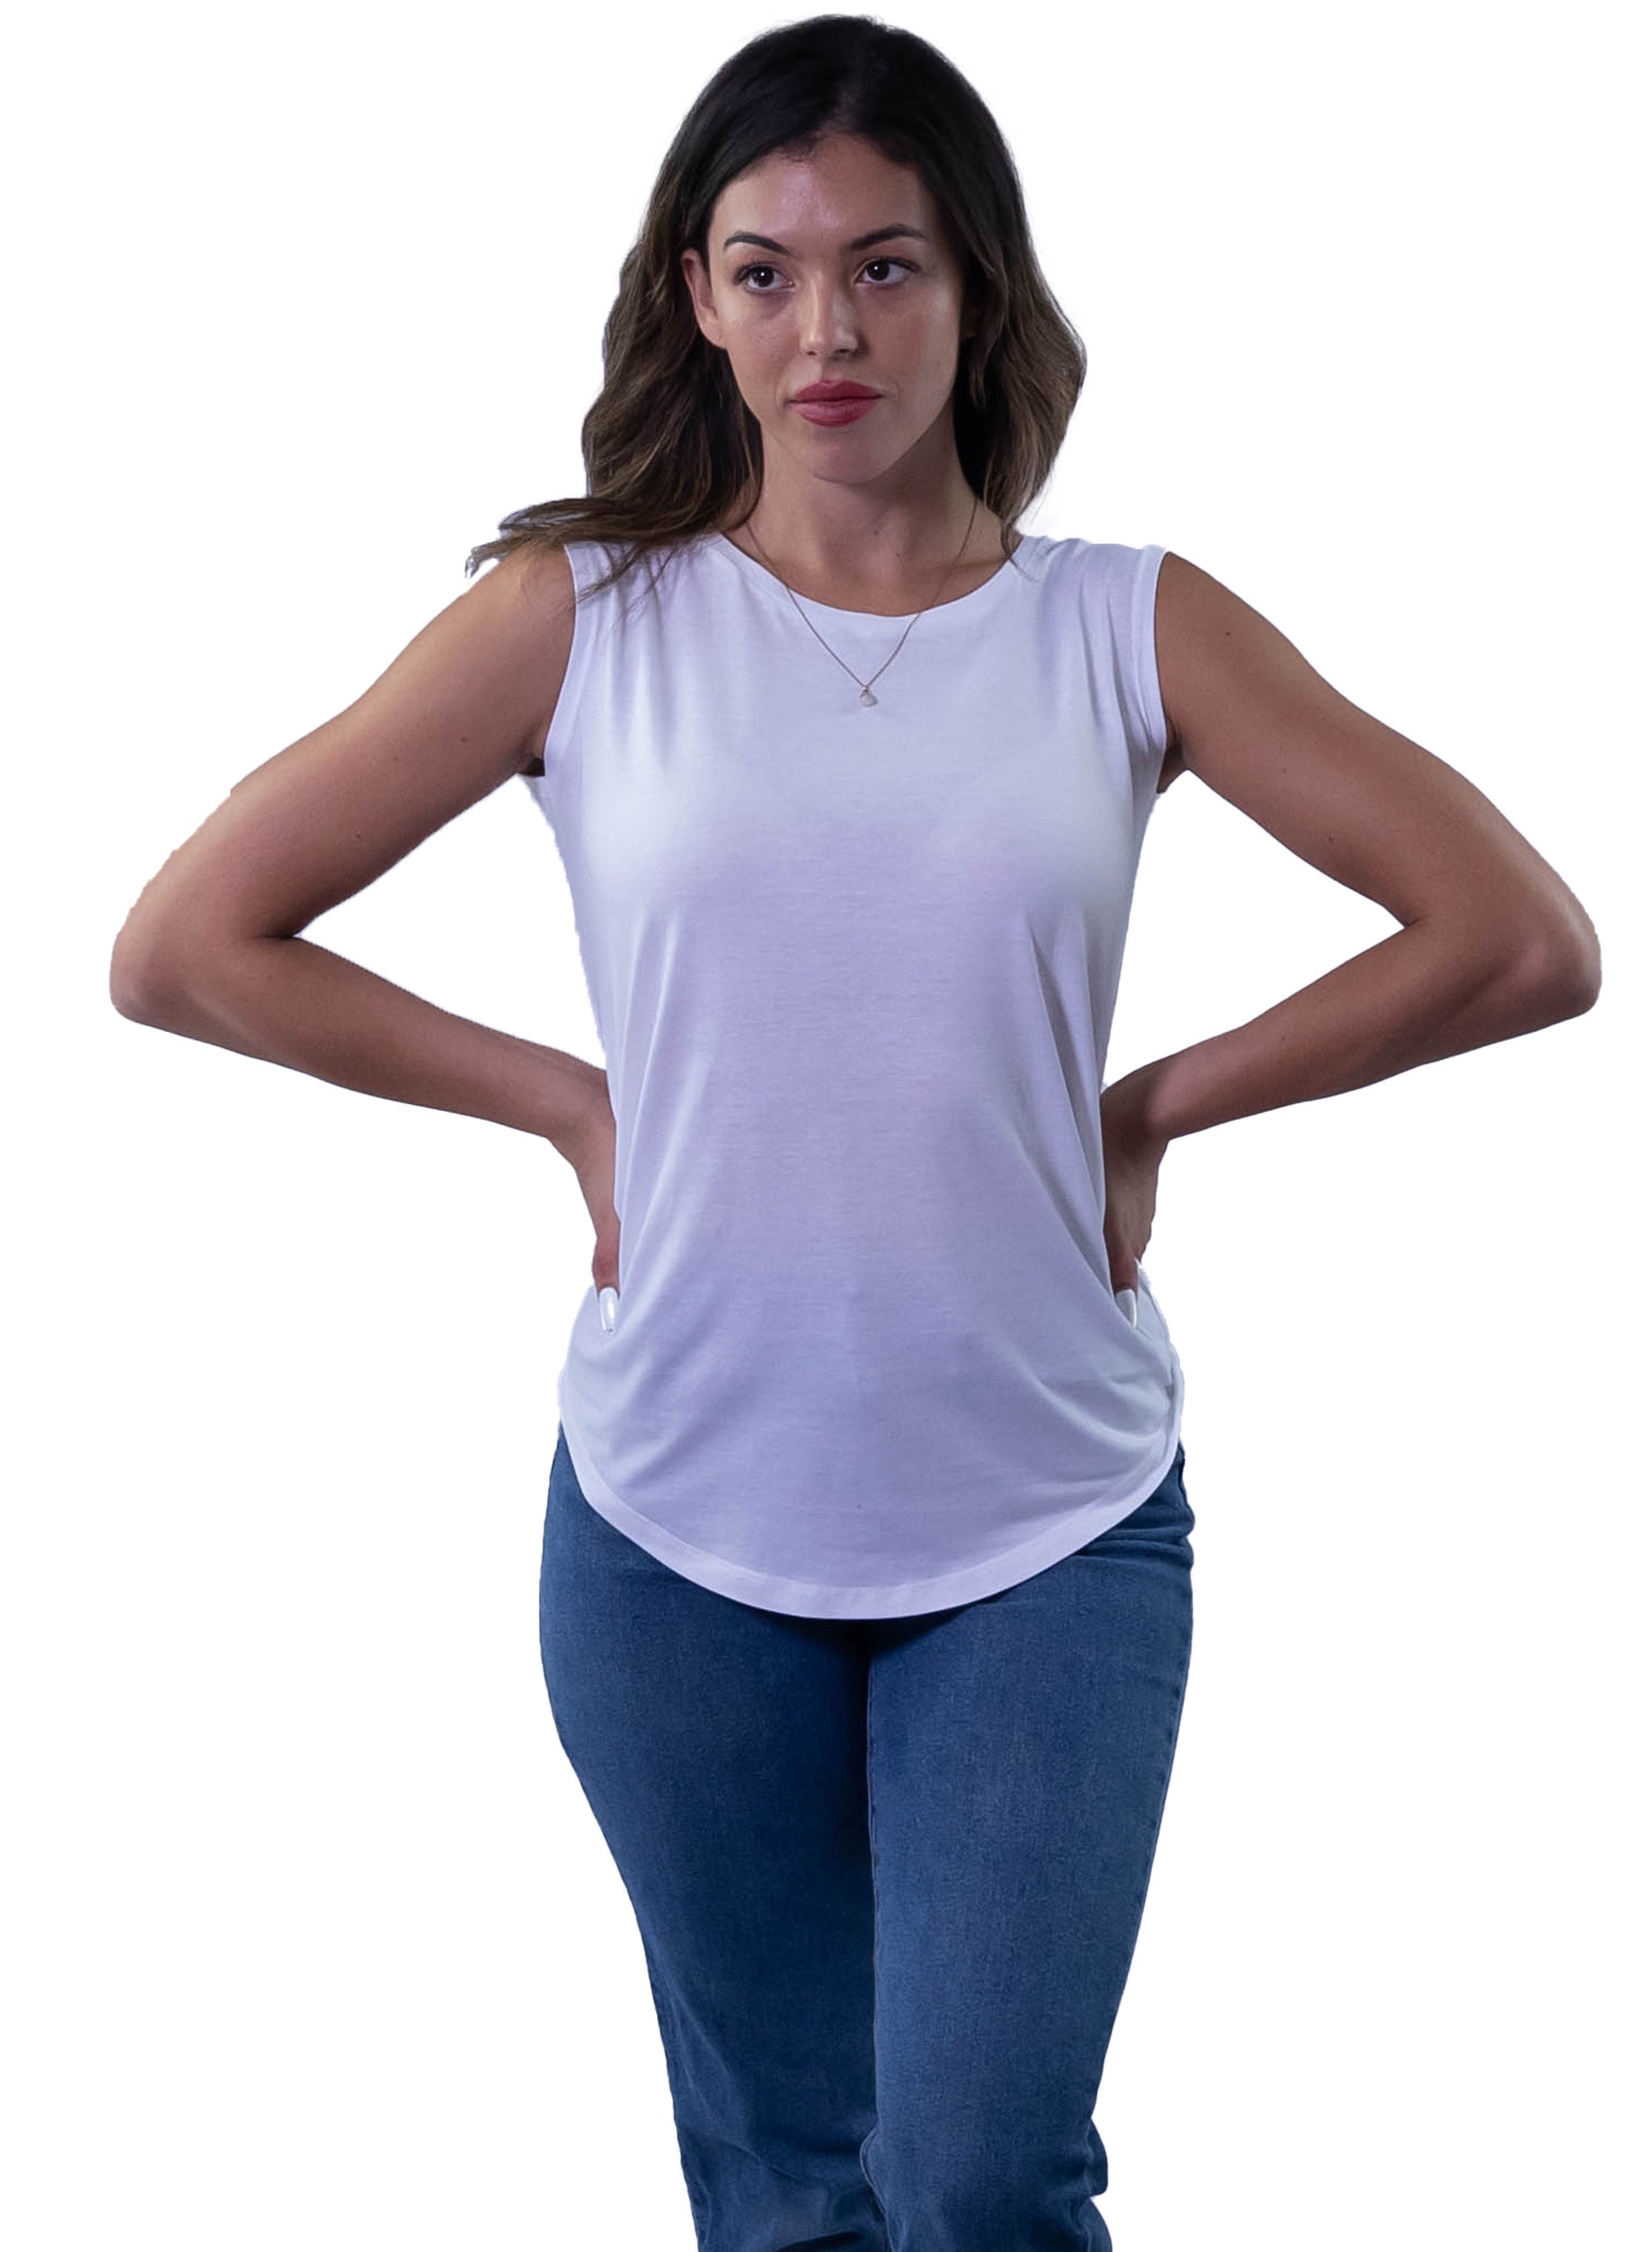 ShirtBANC Womens Drop Cut Everyday Workout Shirt Exercise Culture Tank Top